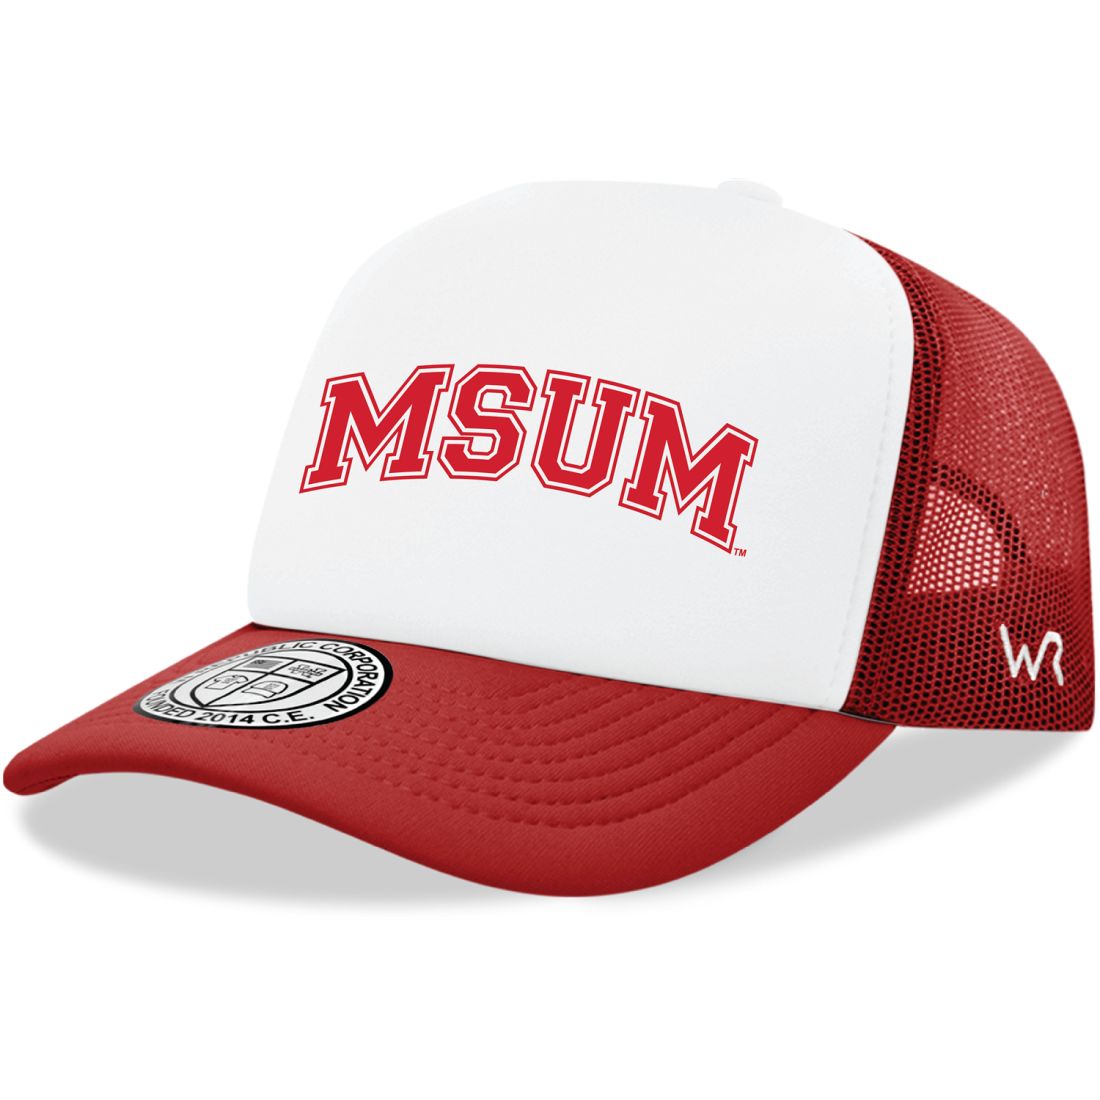 MSUM Minnesota State University Moorhead Dragons Practice Foam Trucker Hats